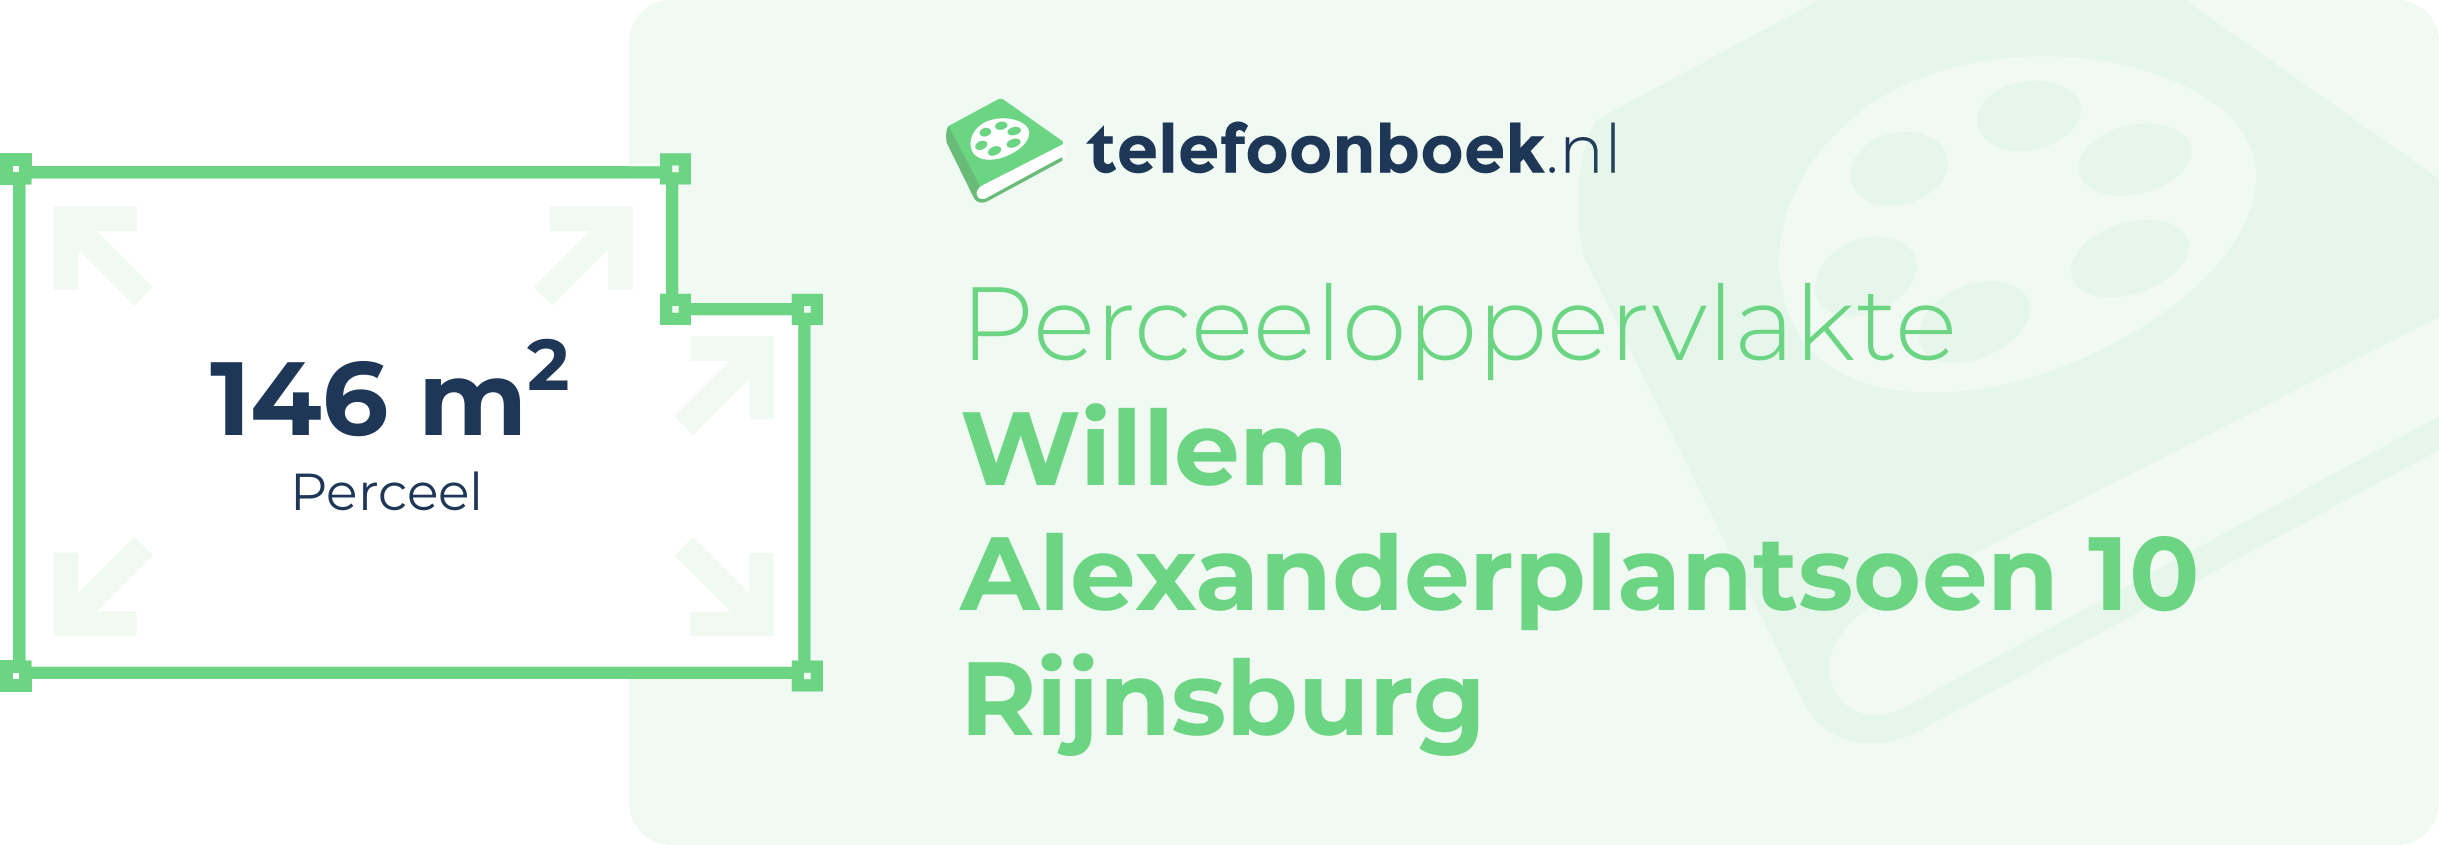 Perceeloppervlakte Willem Alexanderplantsoen 10 Rijnsburg